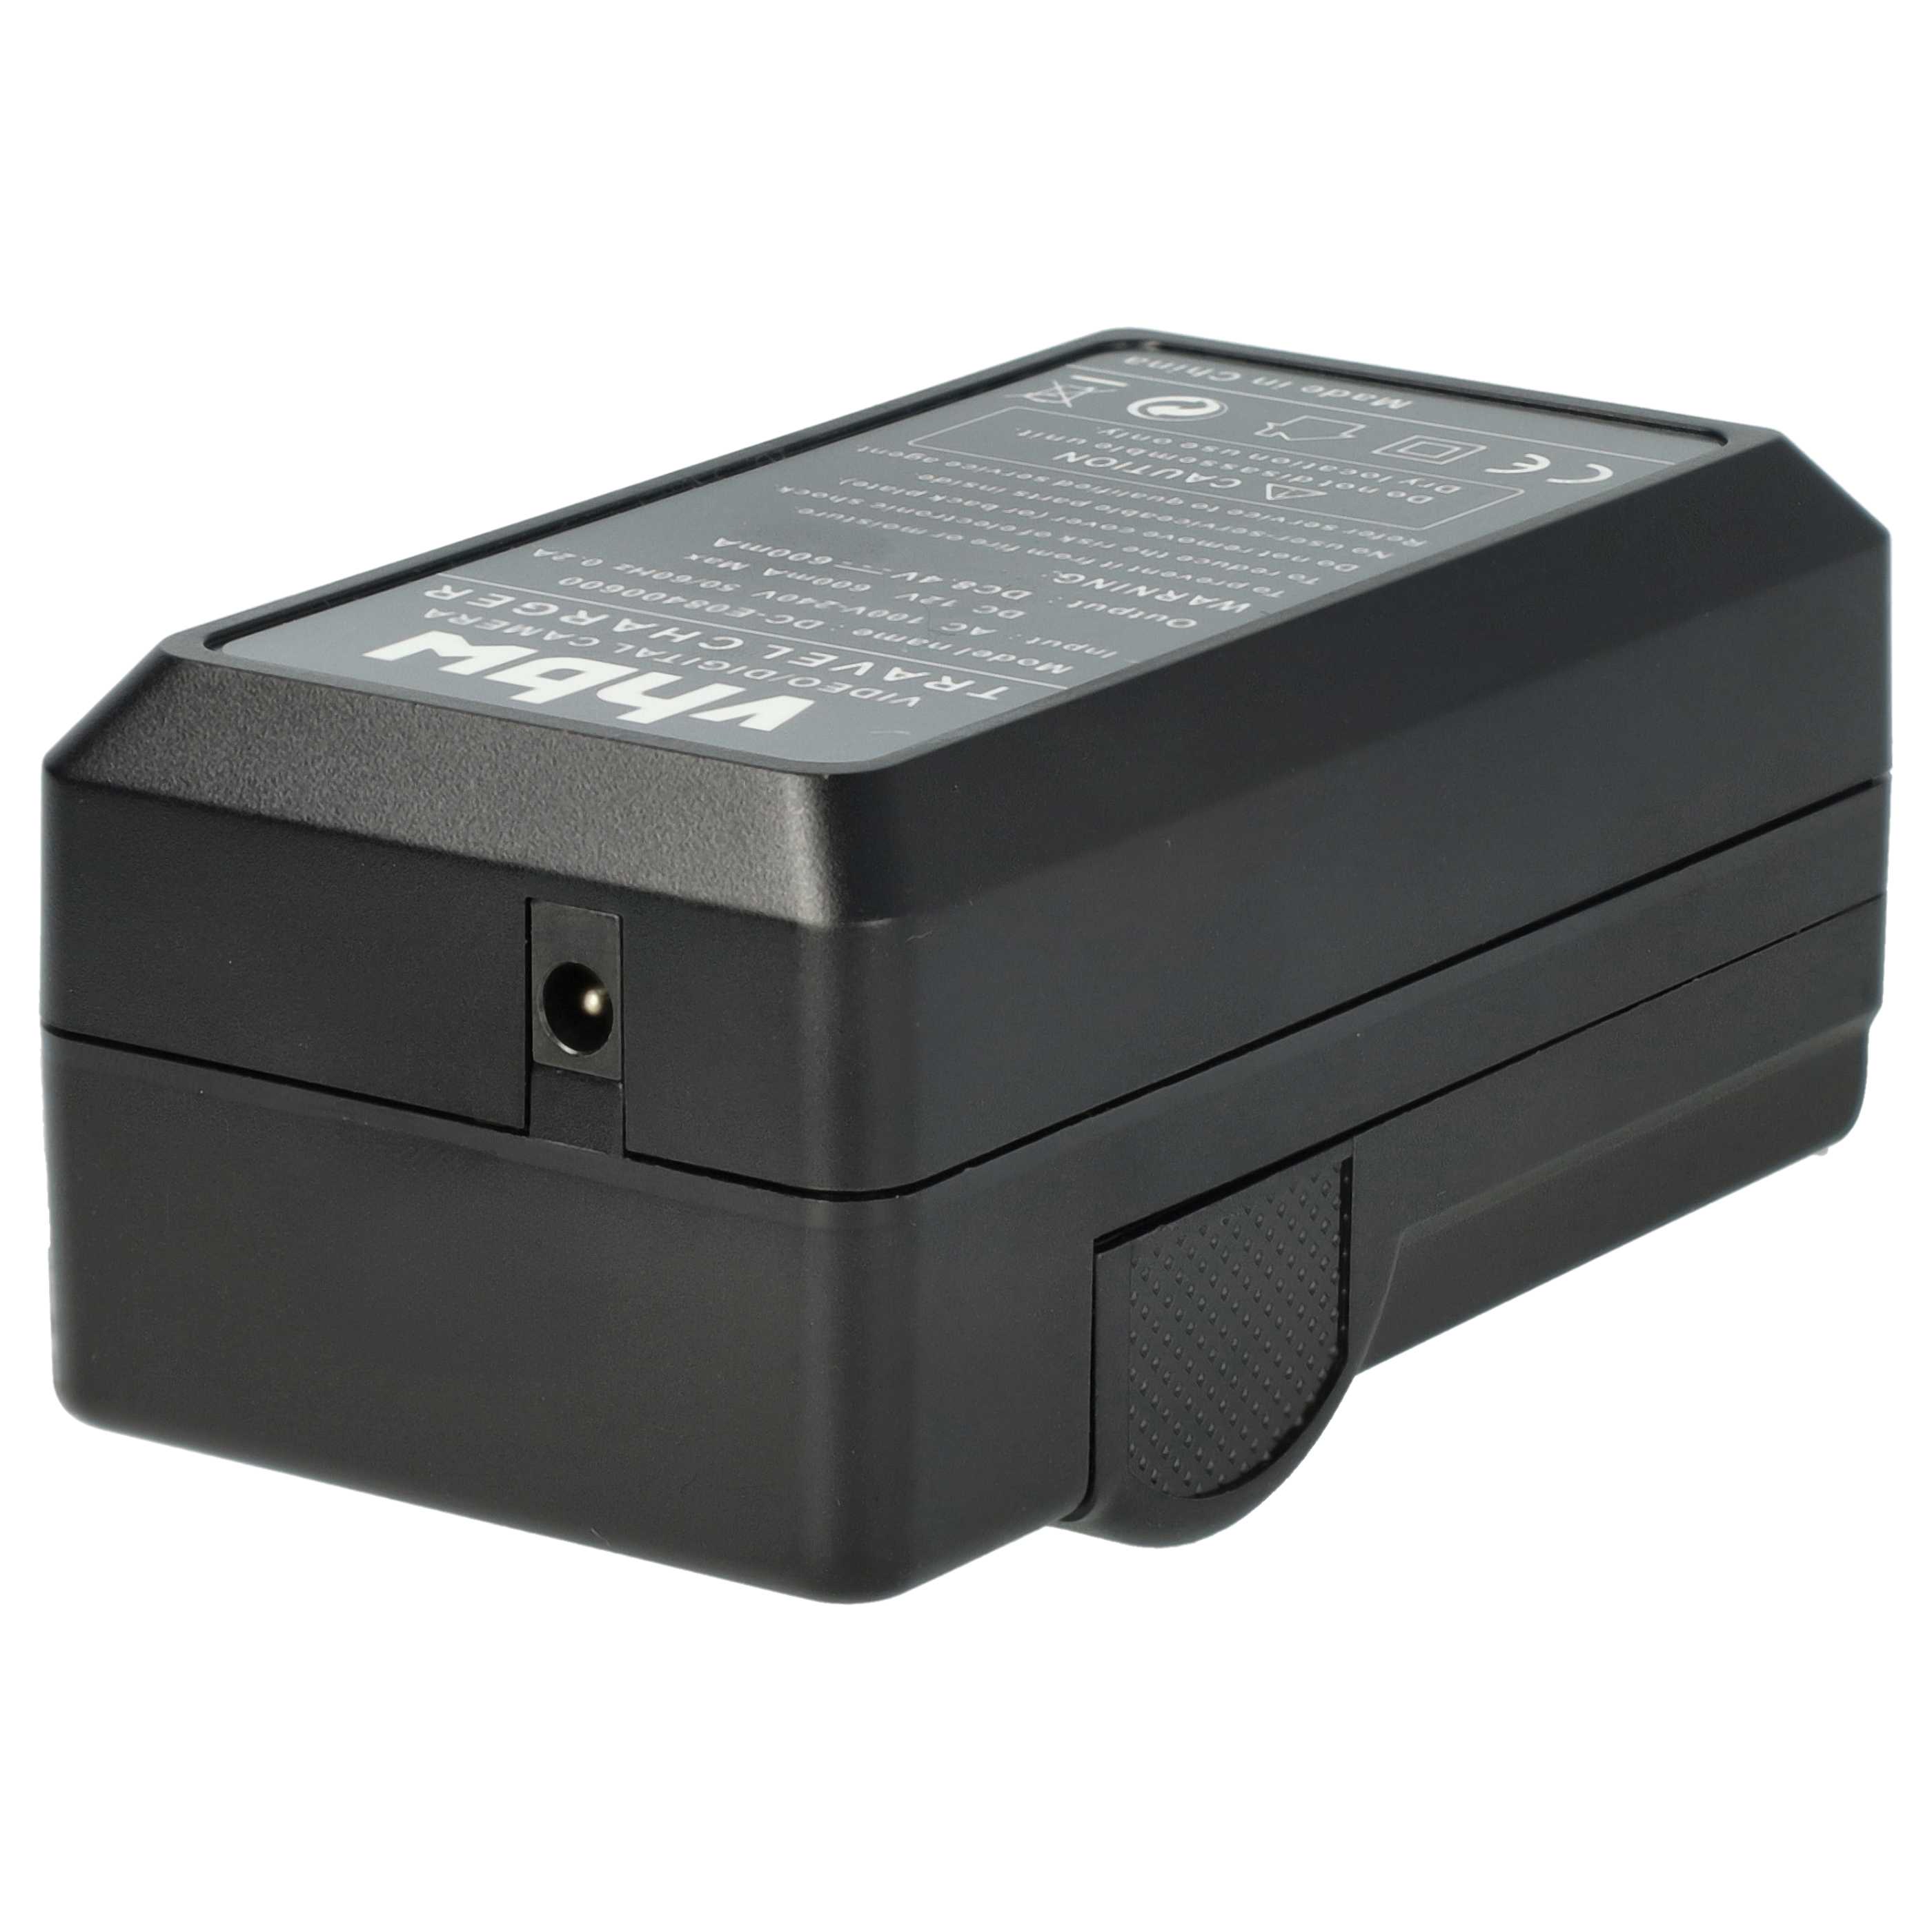 Akku Ladegerät passend für GR-D720 Kamera u.a. - 0,6 A, 8,4 V